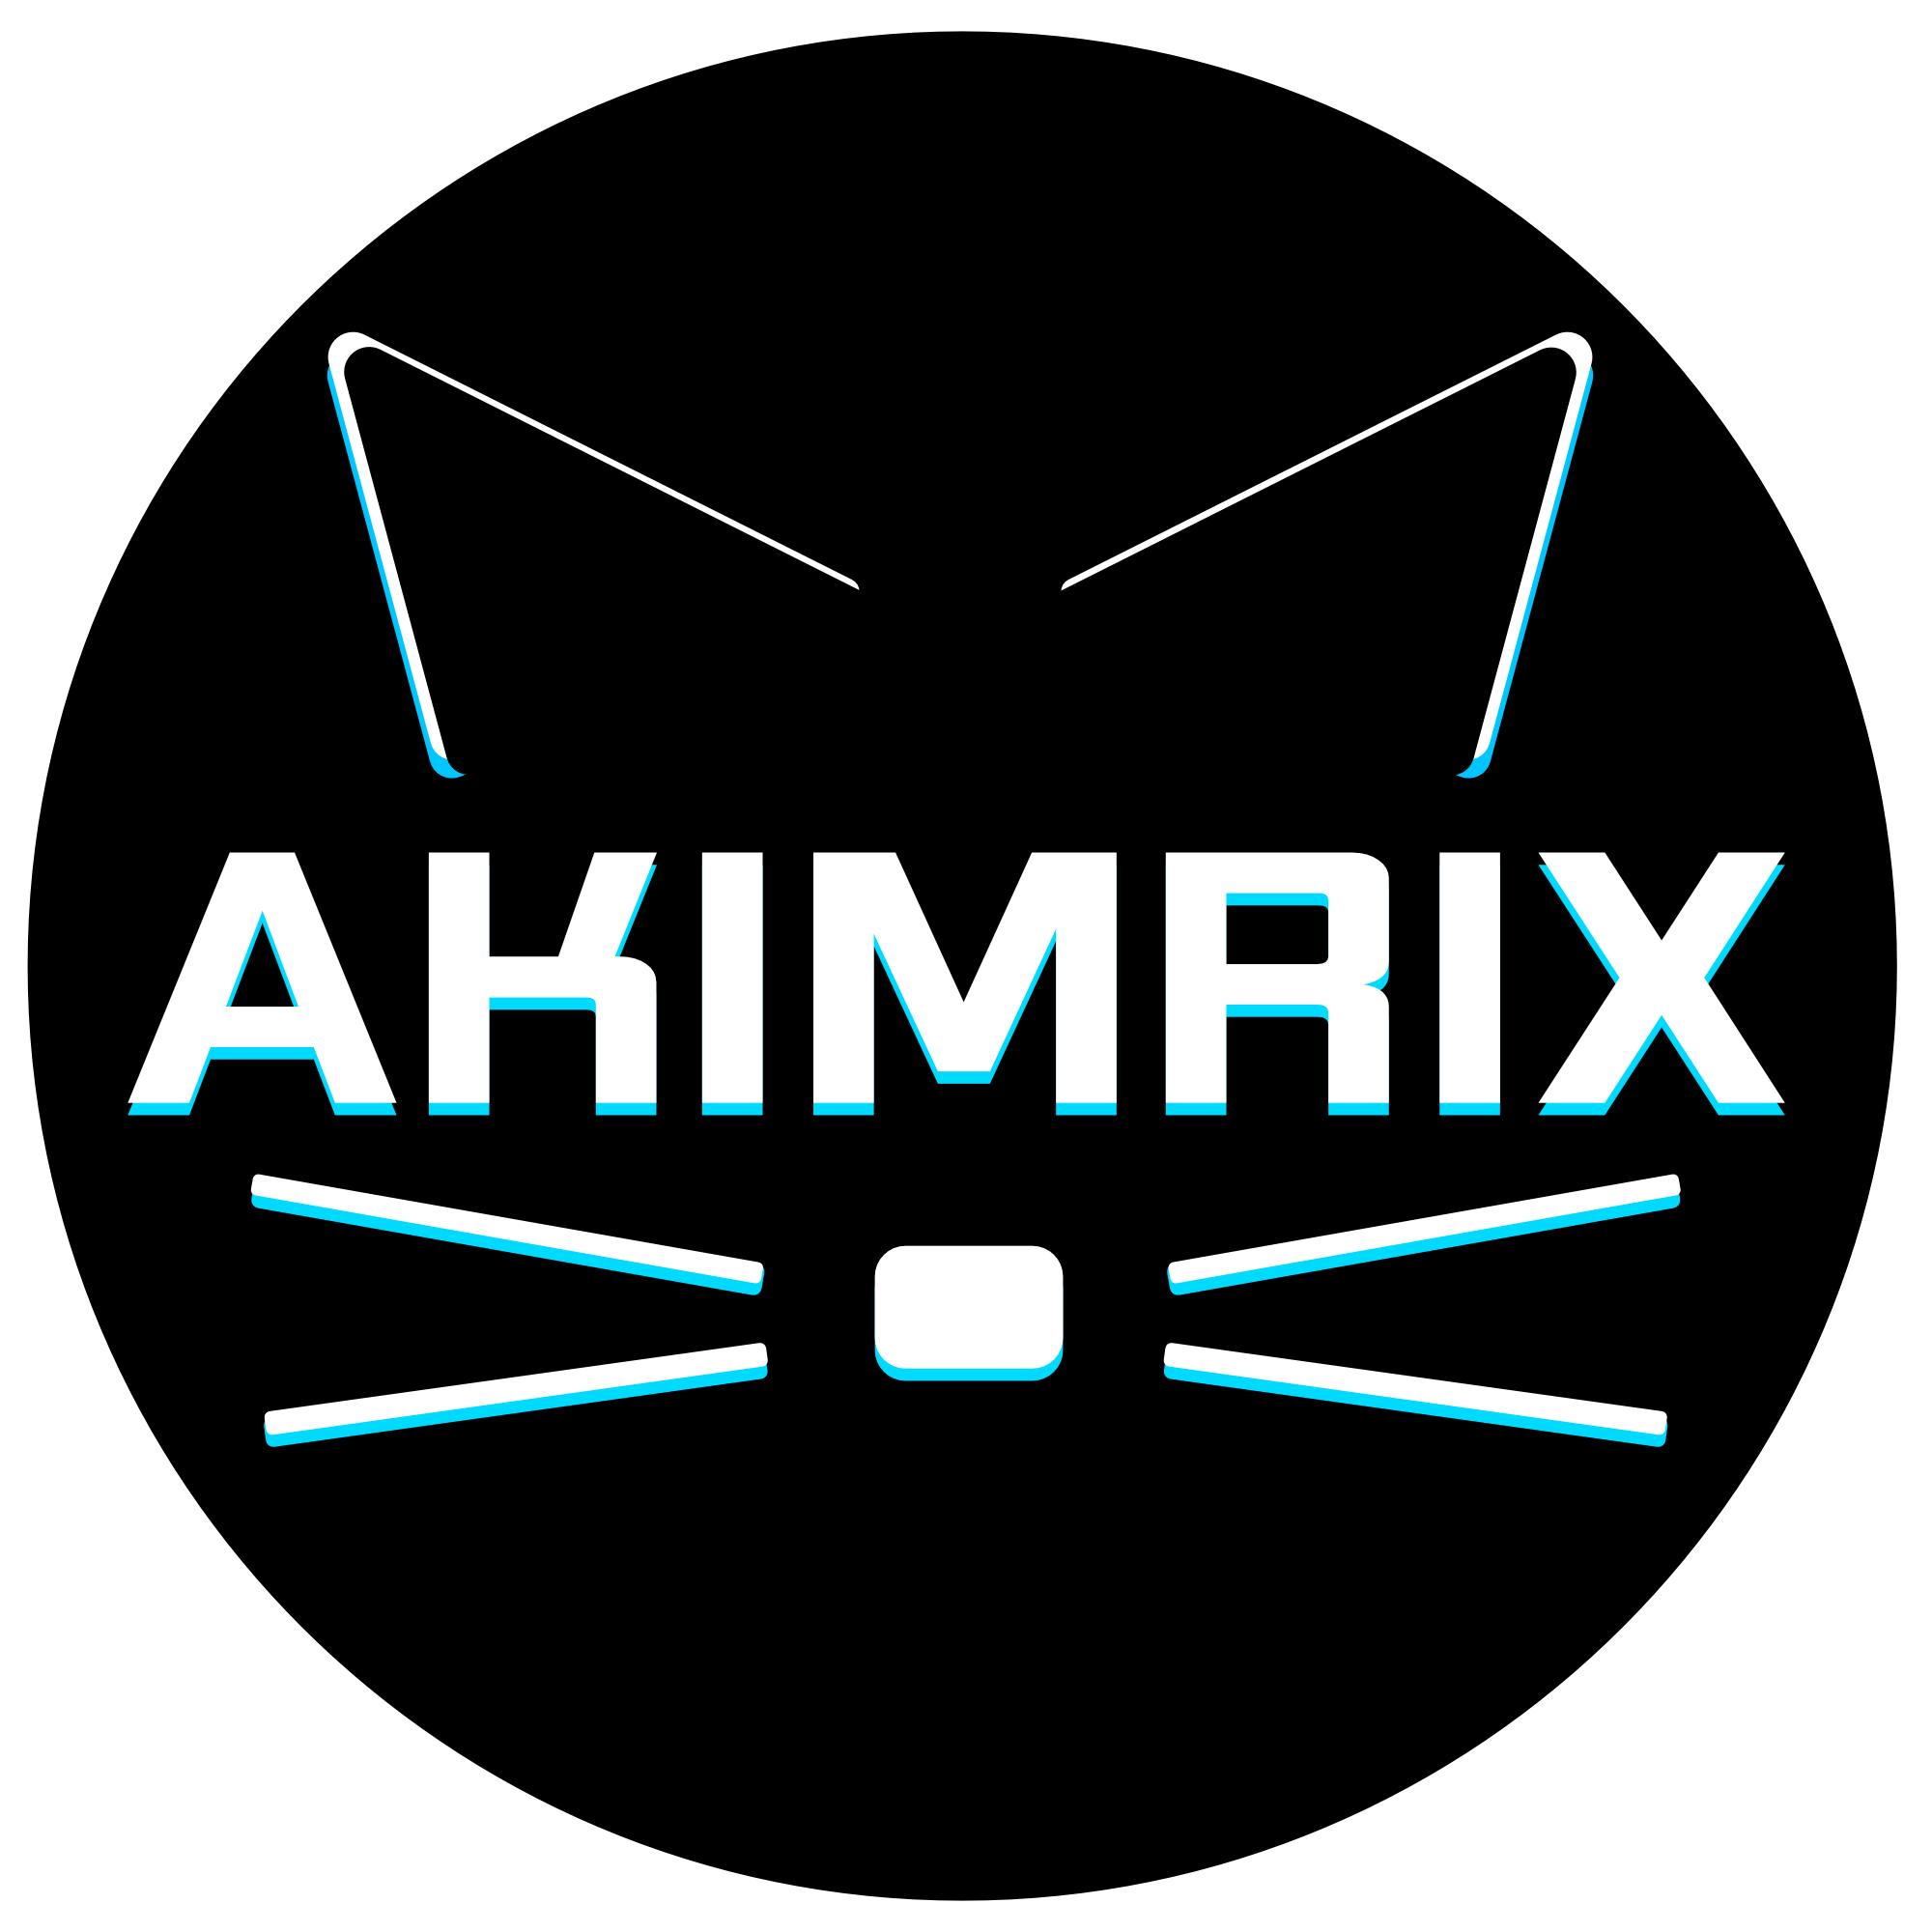 akimrix logo